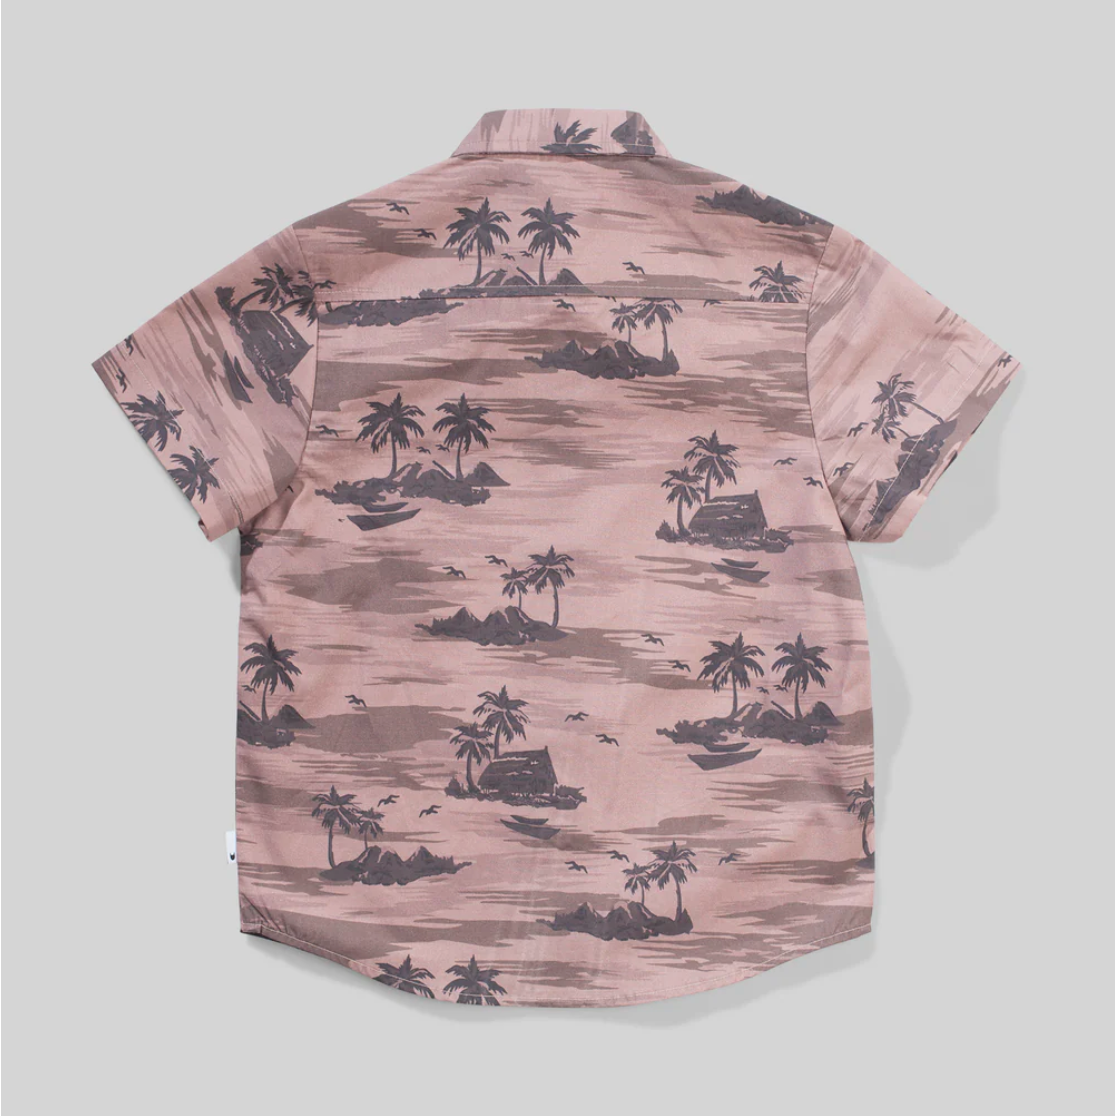 islandhang shirt in fawn